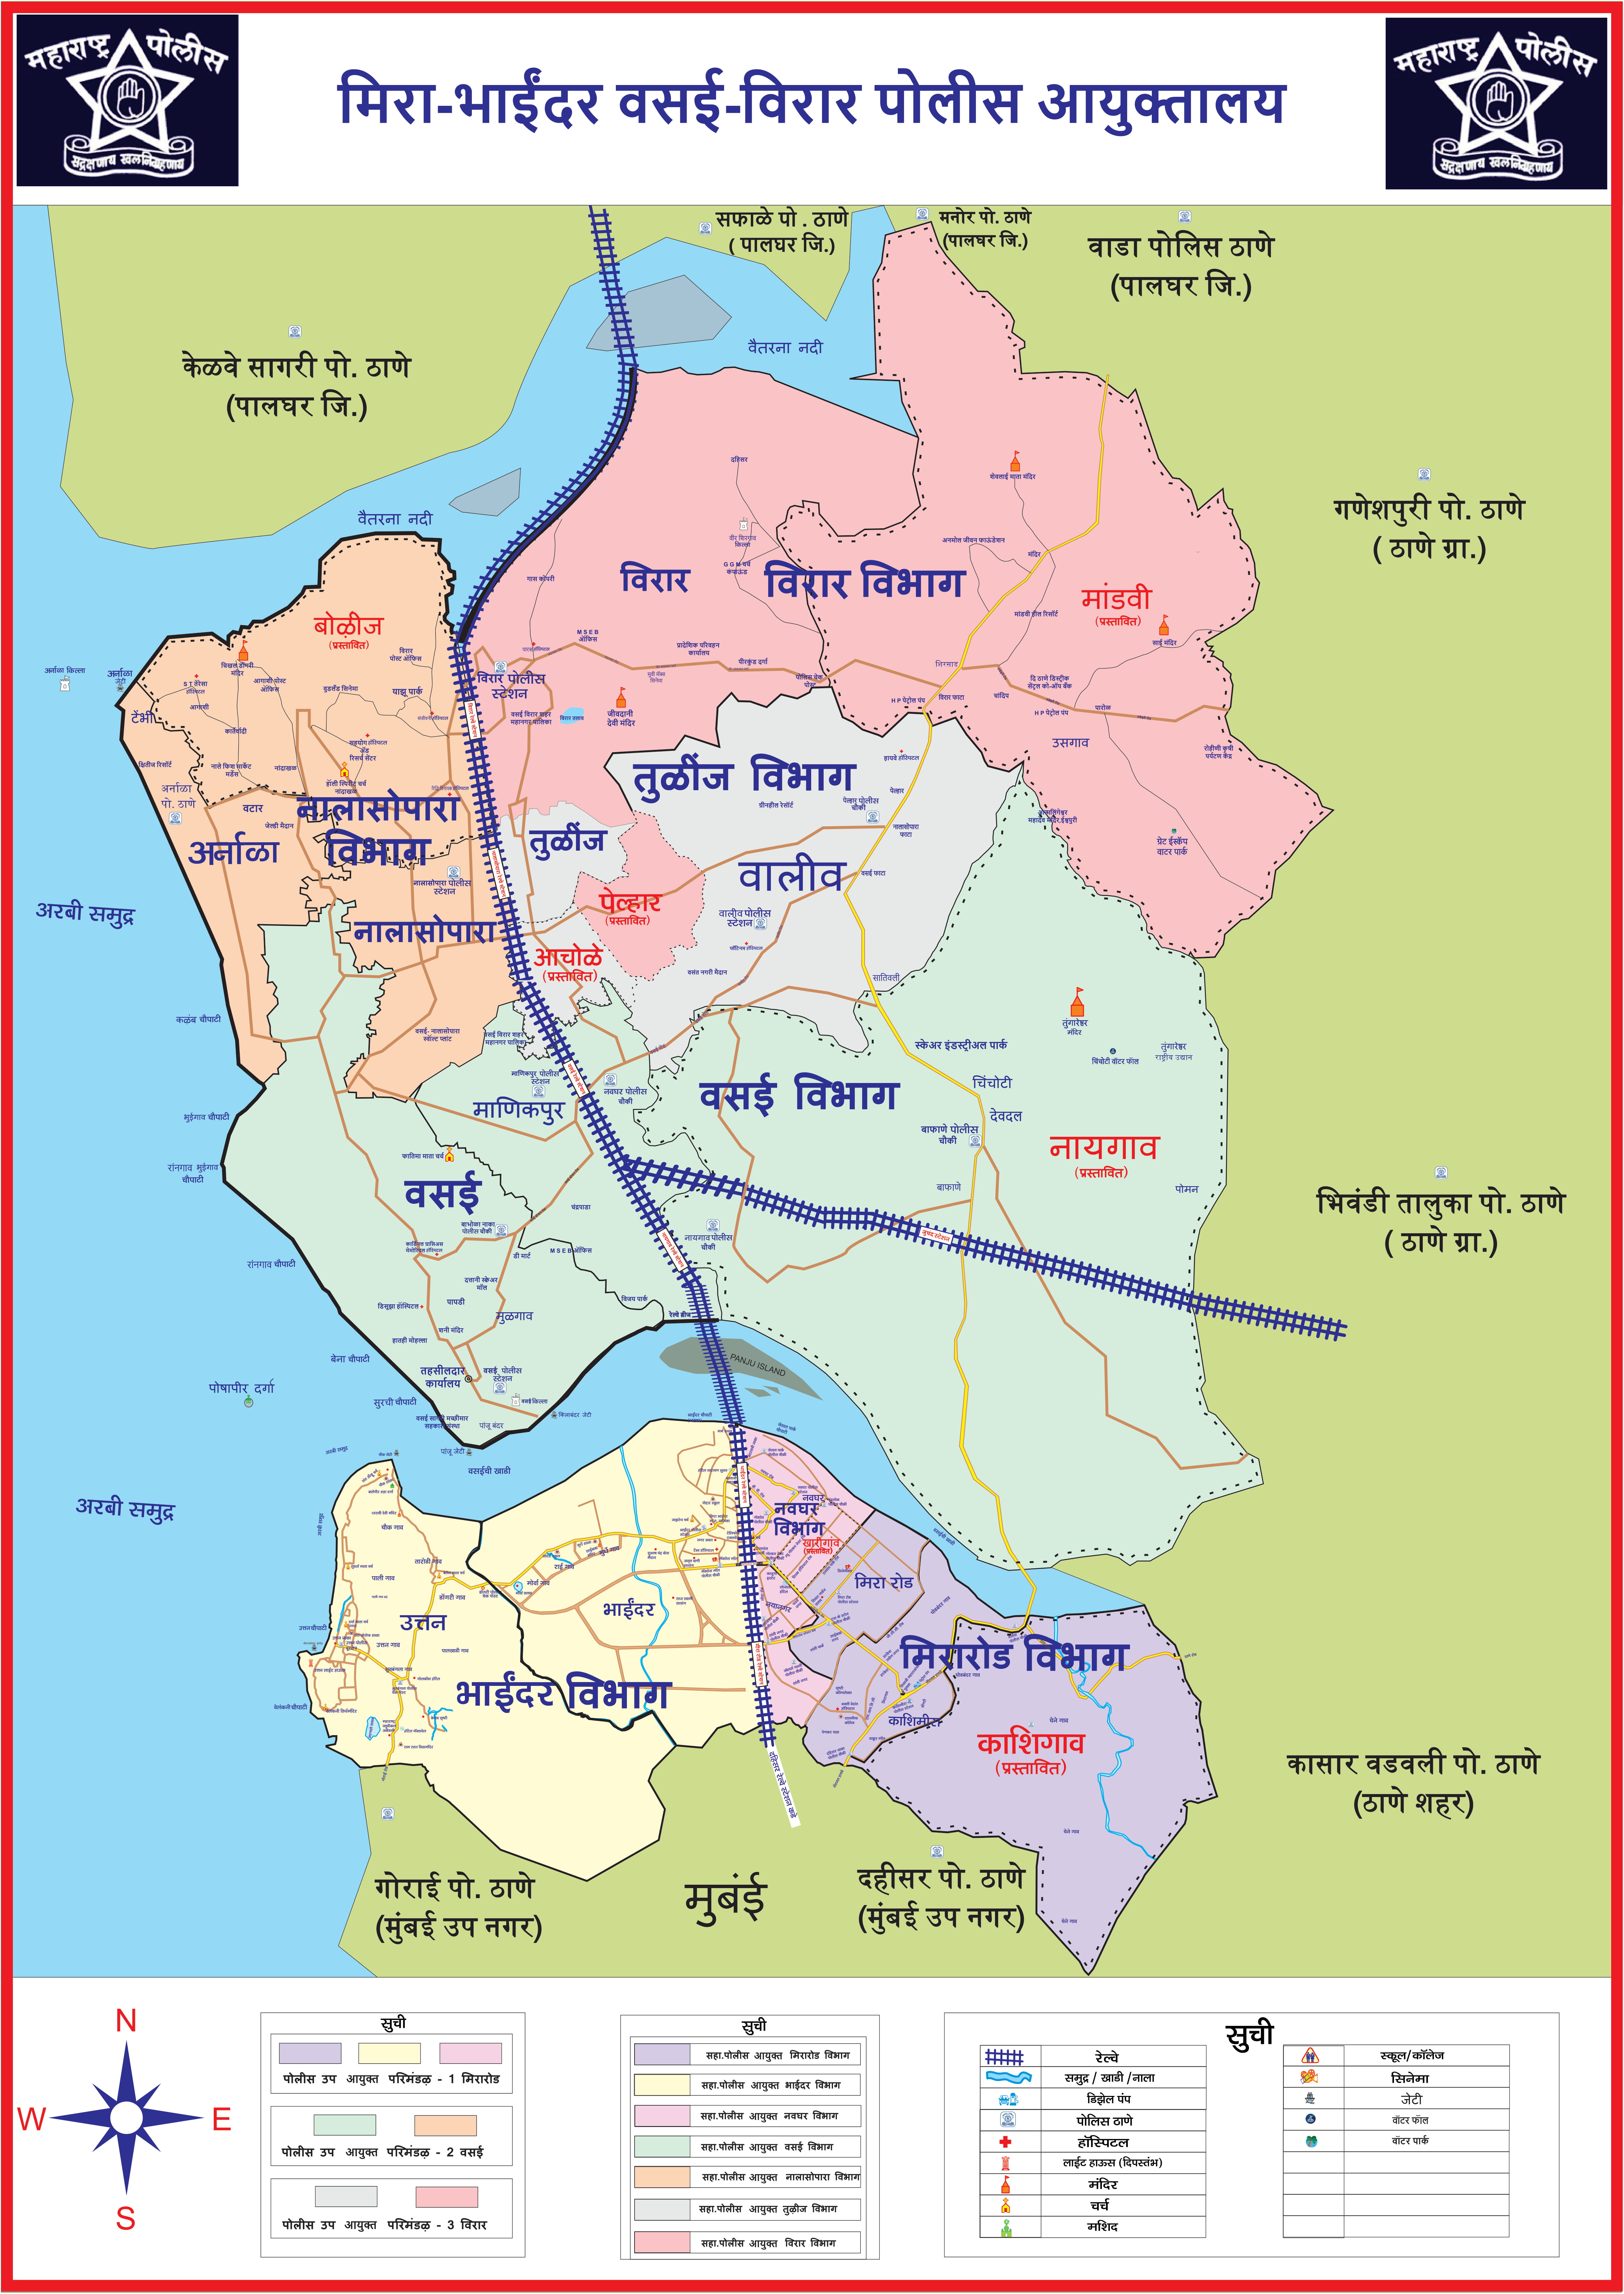 Printable street map of Vasai-Virar, India